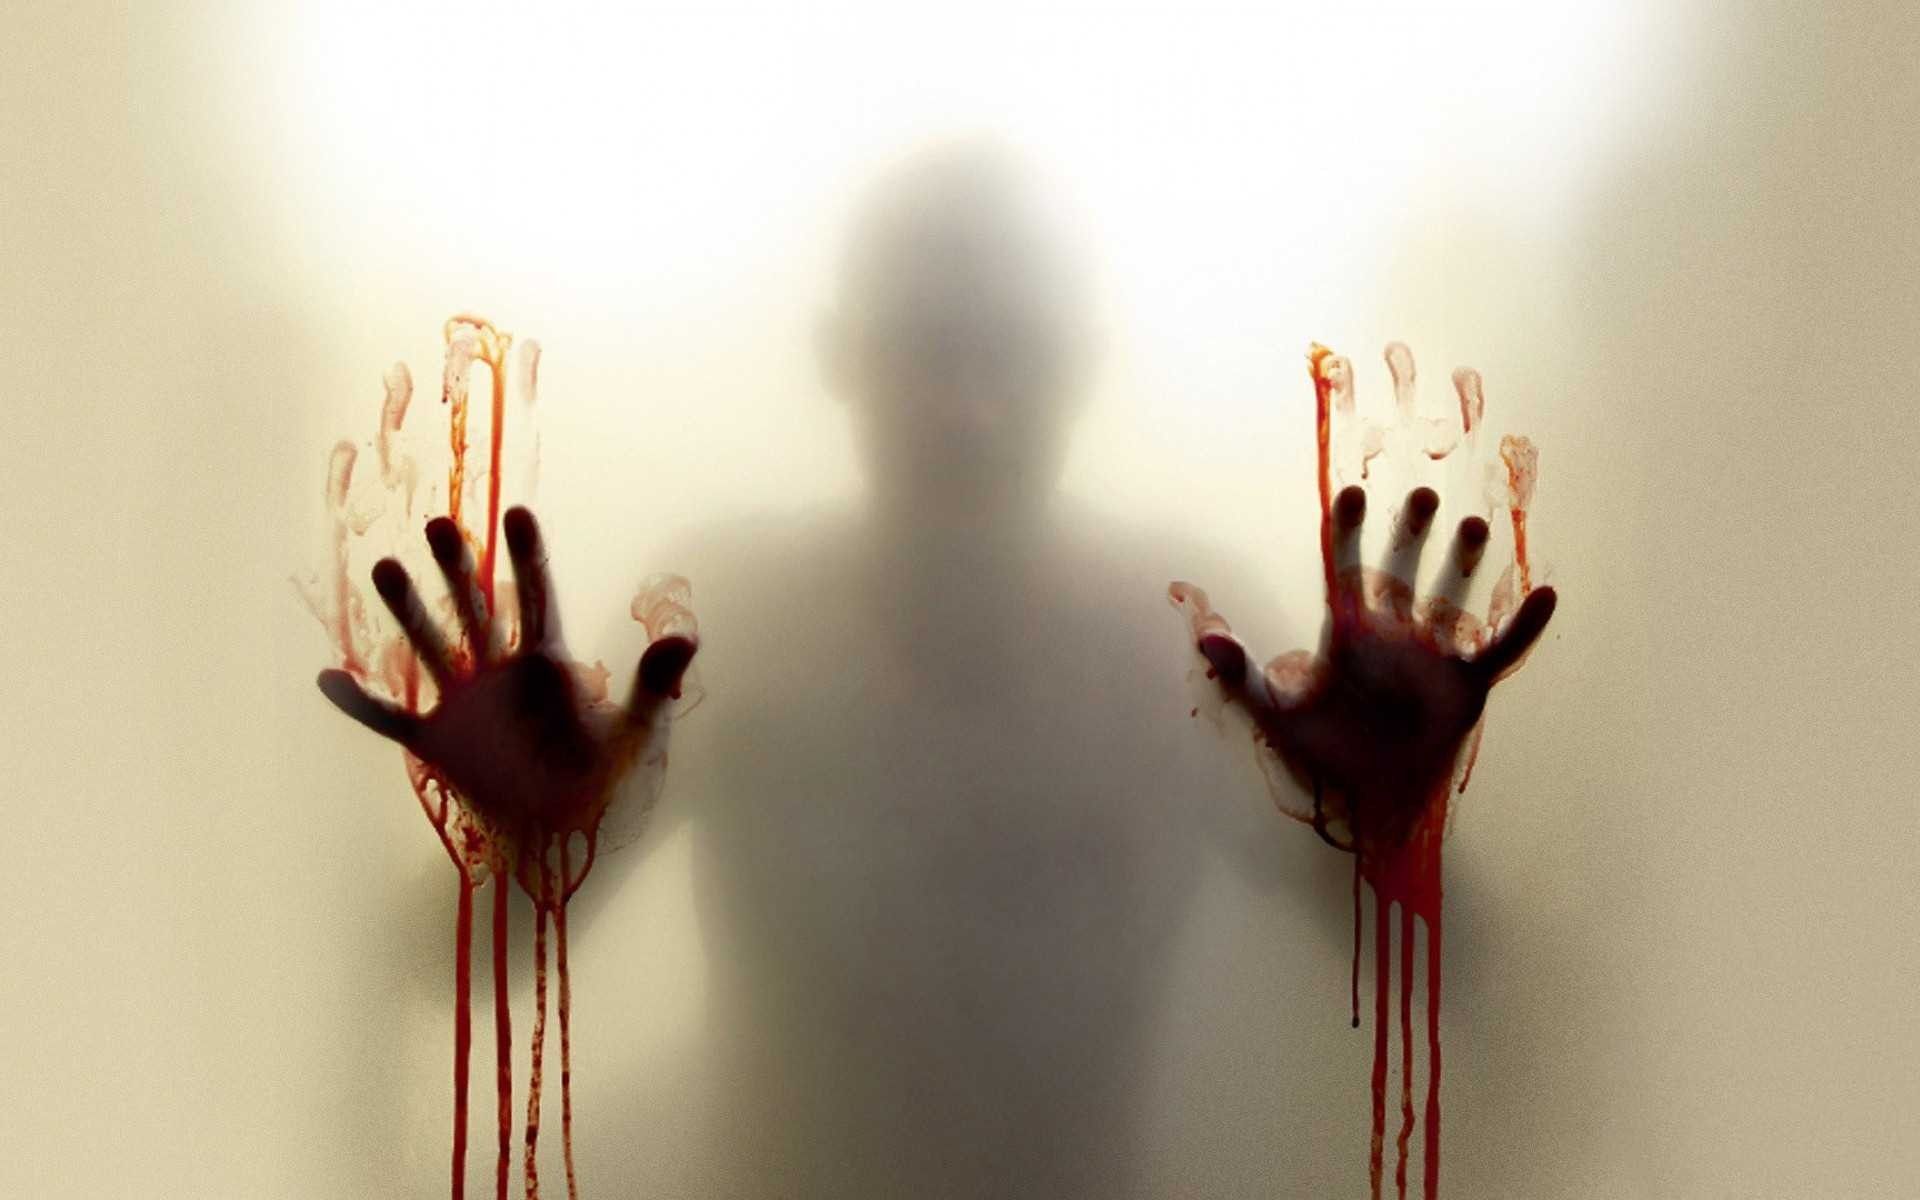 horror wallpaper android,light,hand,finger,shadow,human